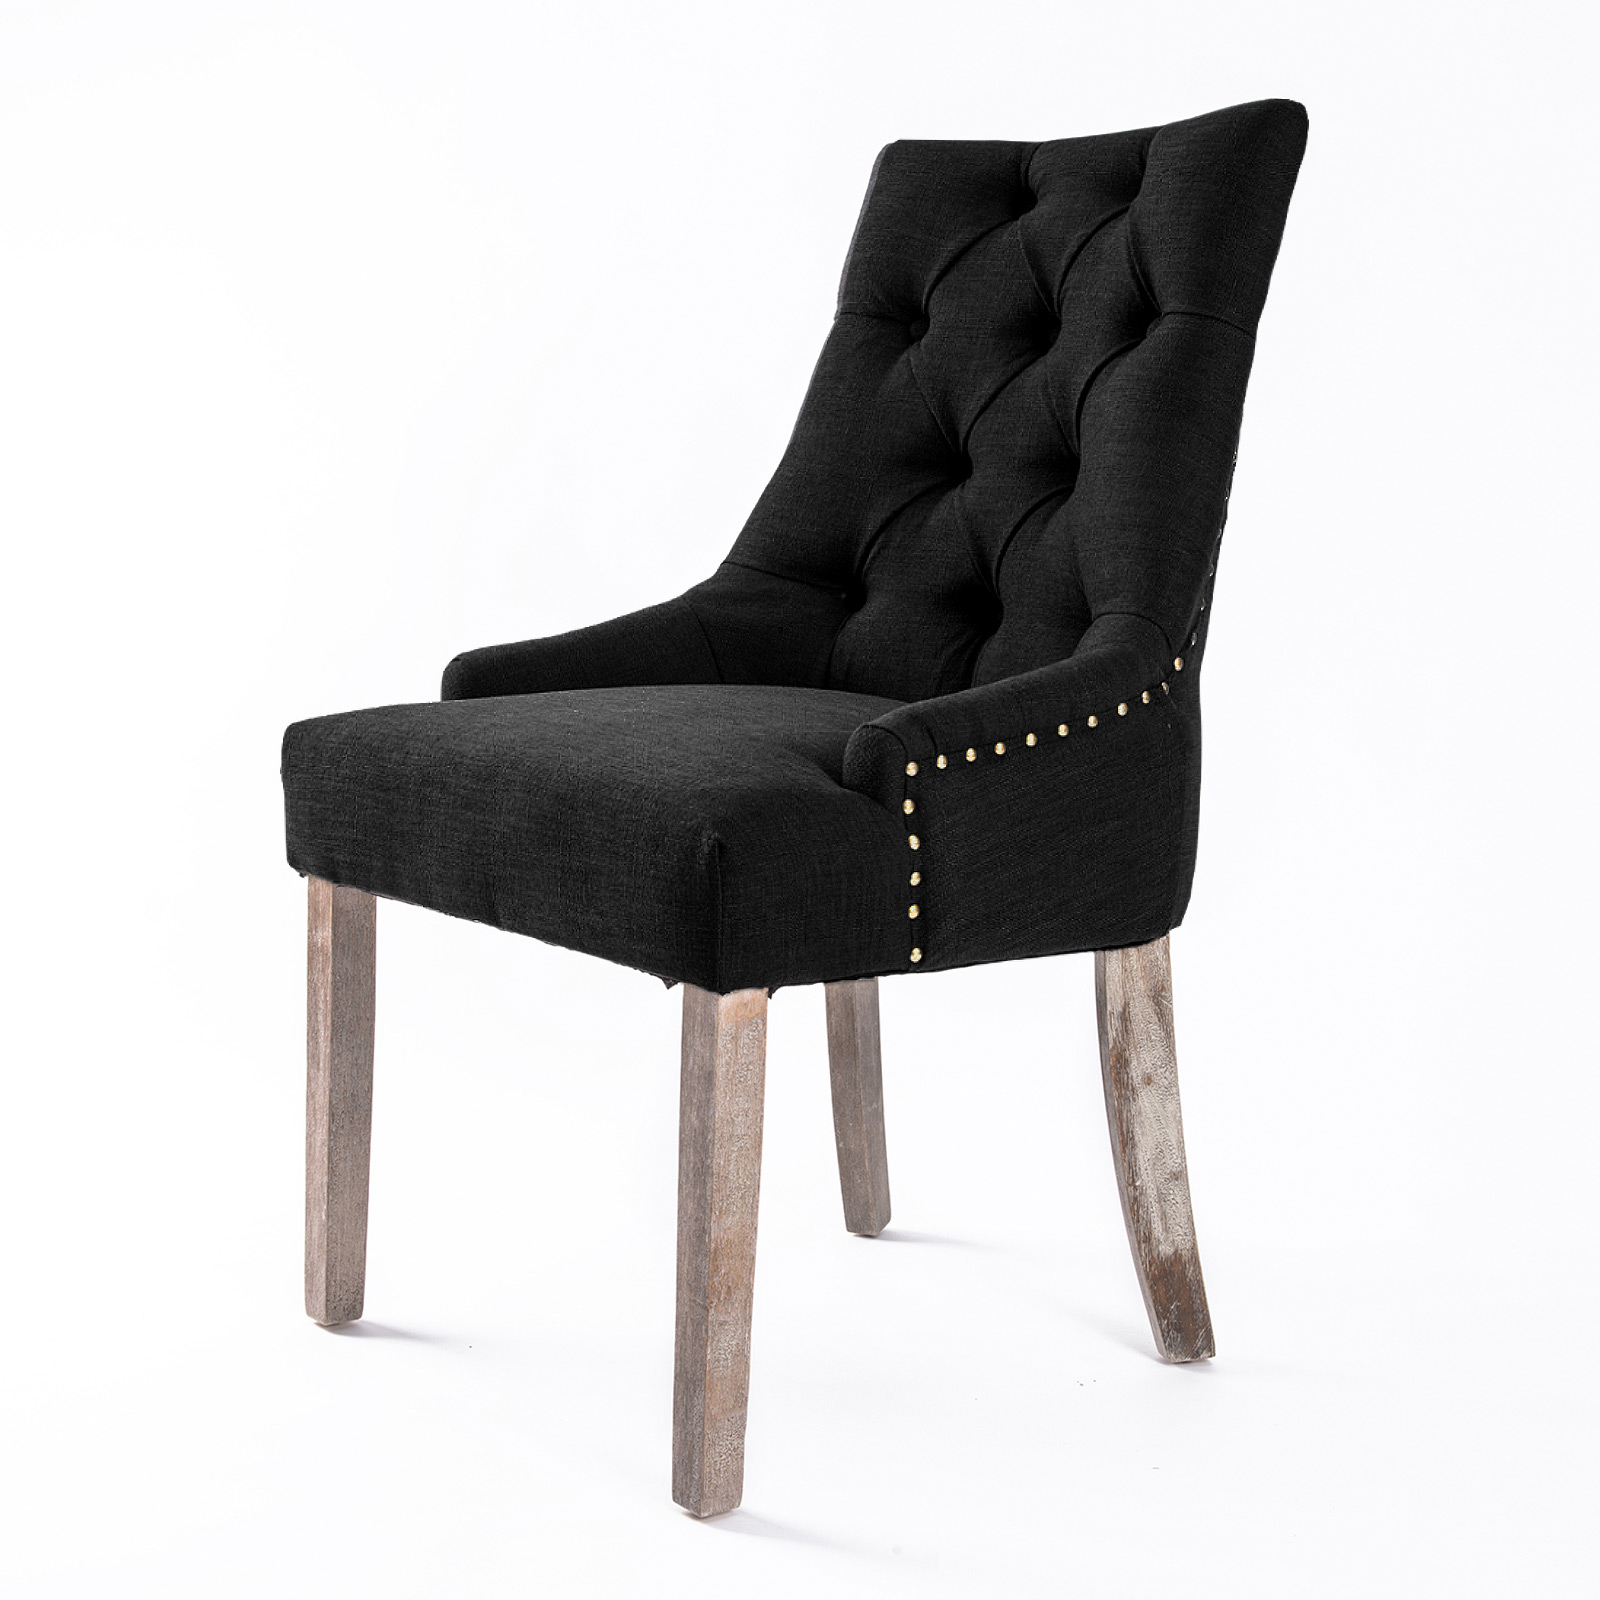 1X French Provincial Oak Leg Chair AMOUR - DARK BLACK